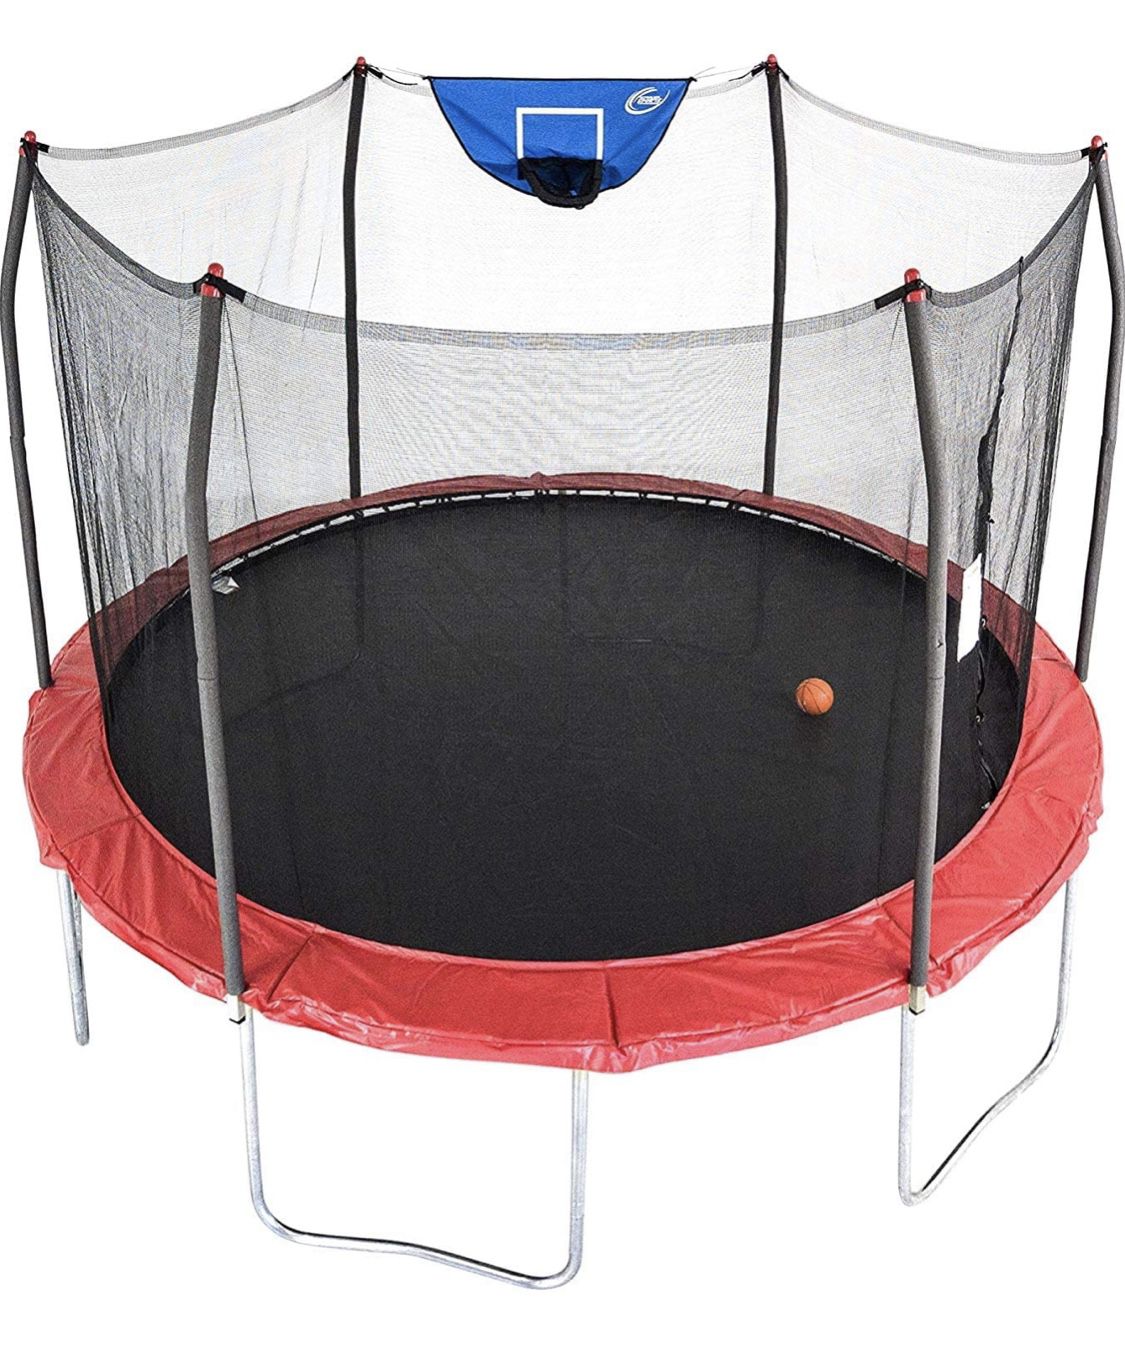 Skywalker - 12 foot trampoline with basketball hoop set (New)